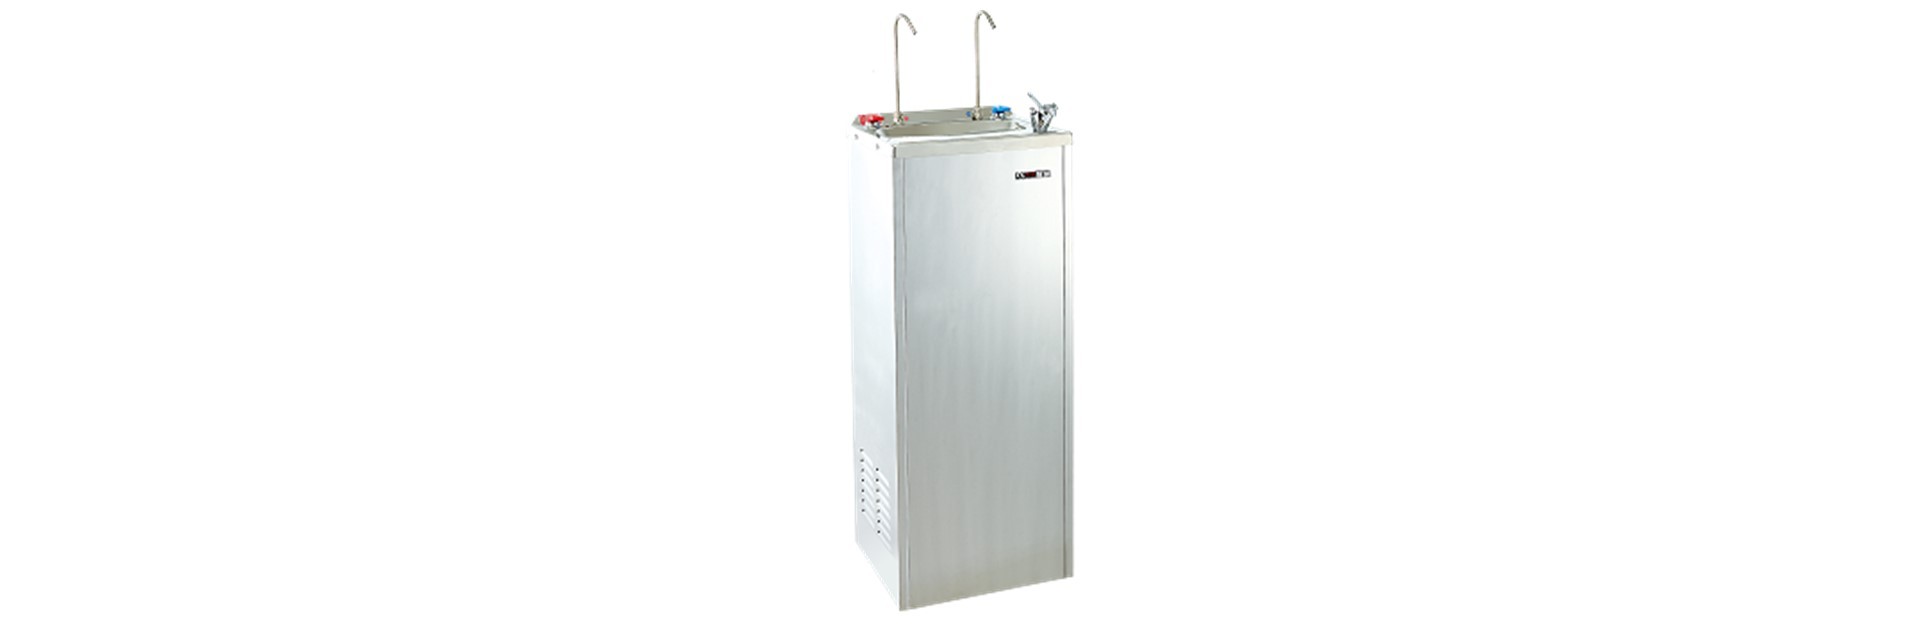 LC-860 SeriesWarm(Cold) / Hot Water Dispenser